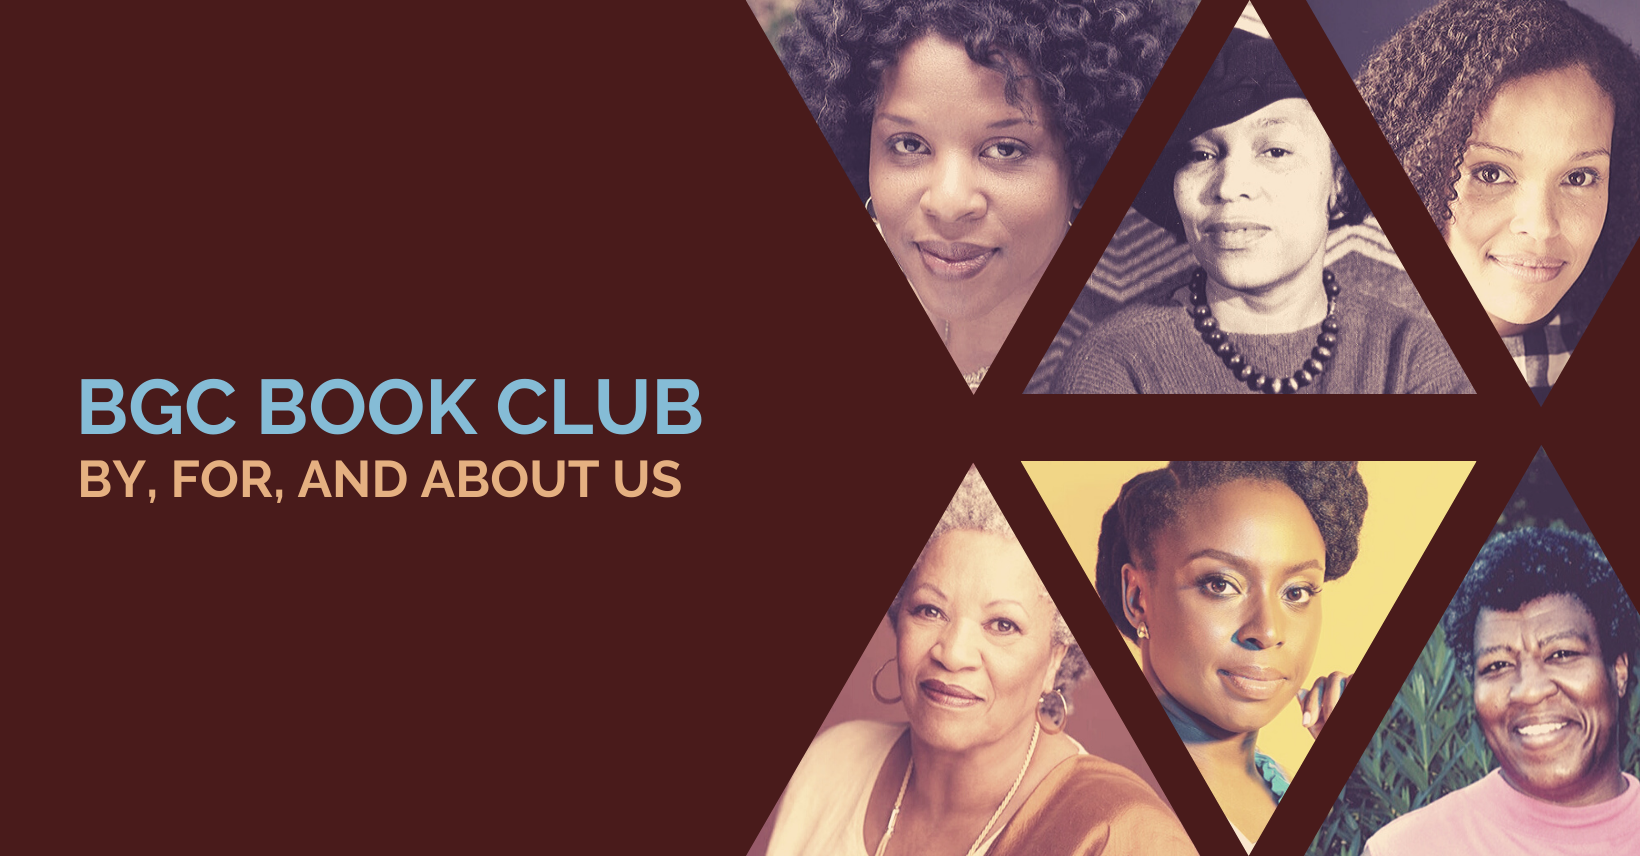 Introducing the BGC Book Club